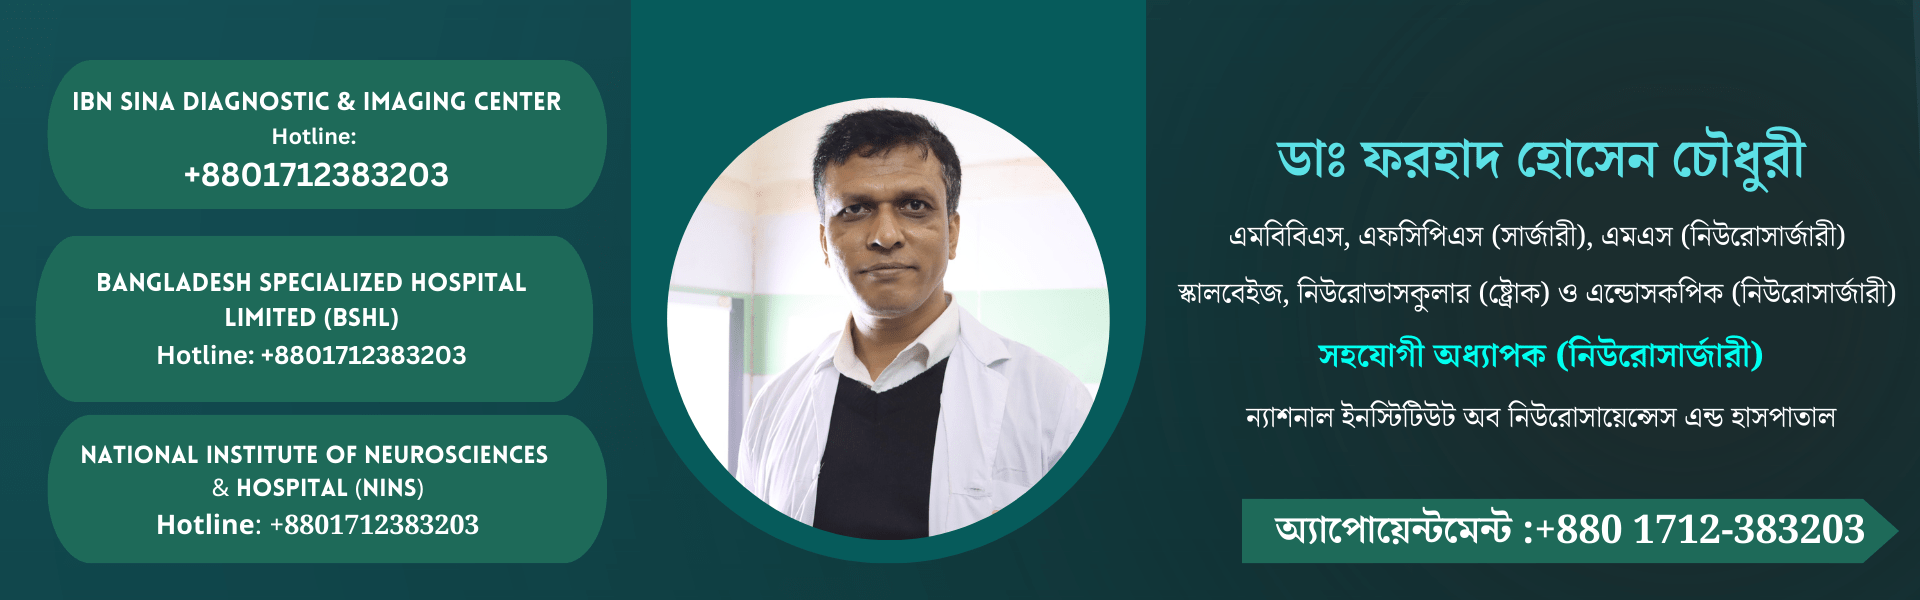 Dr. Forhad Hossain Chowdhury desktop (3)